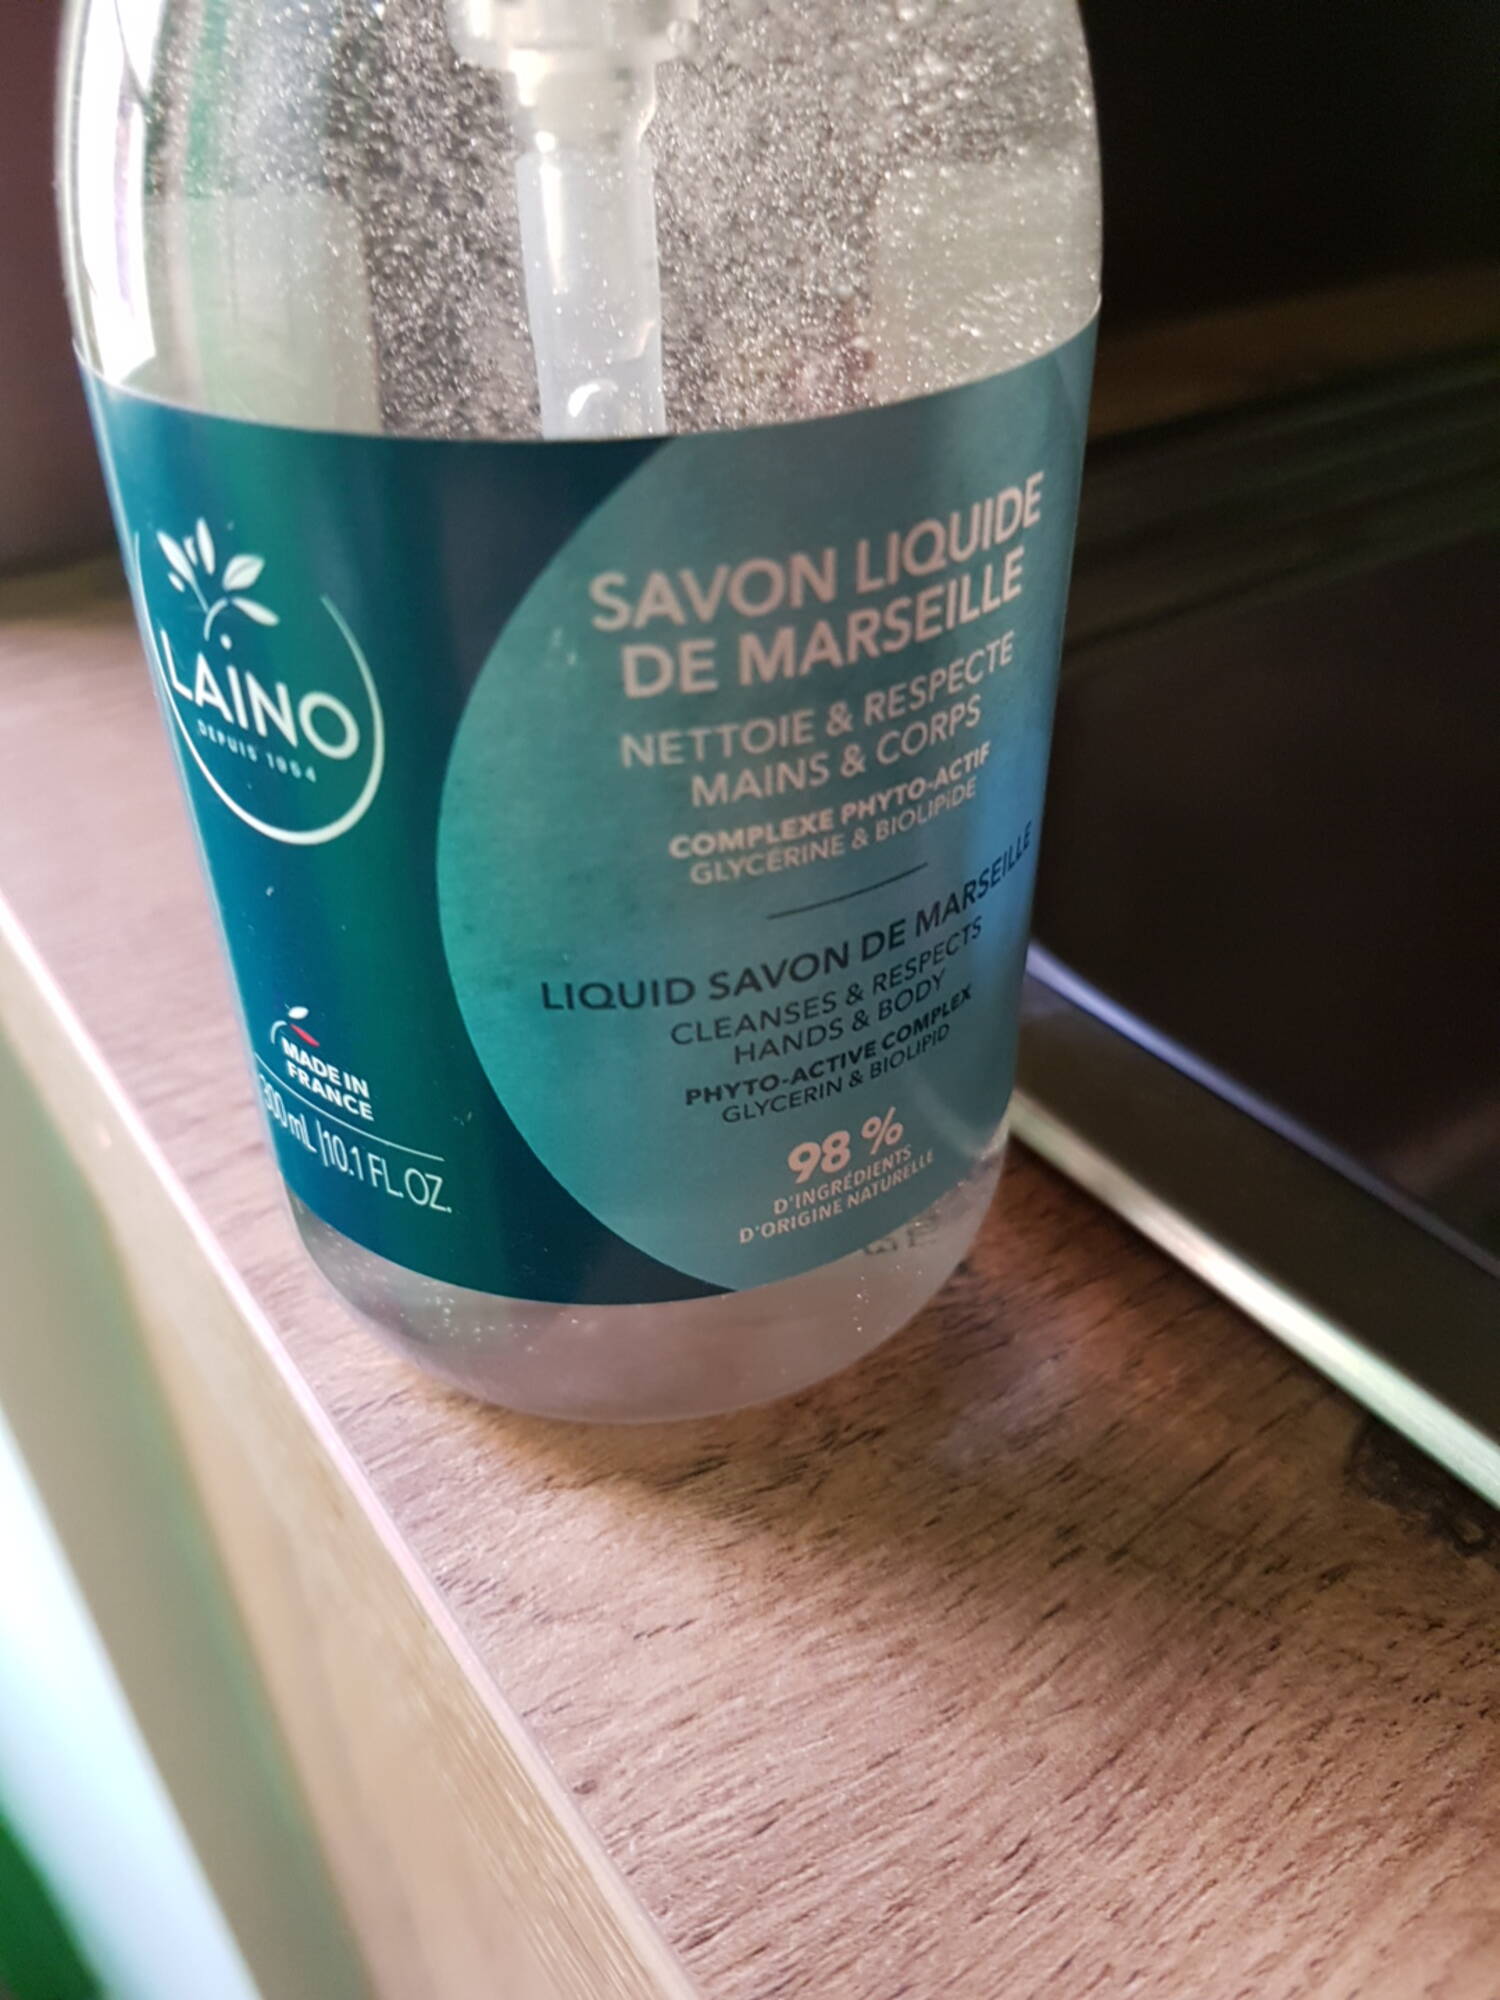 LAINO - Savon liquide de Marseille mains & corps